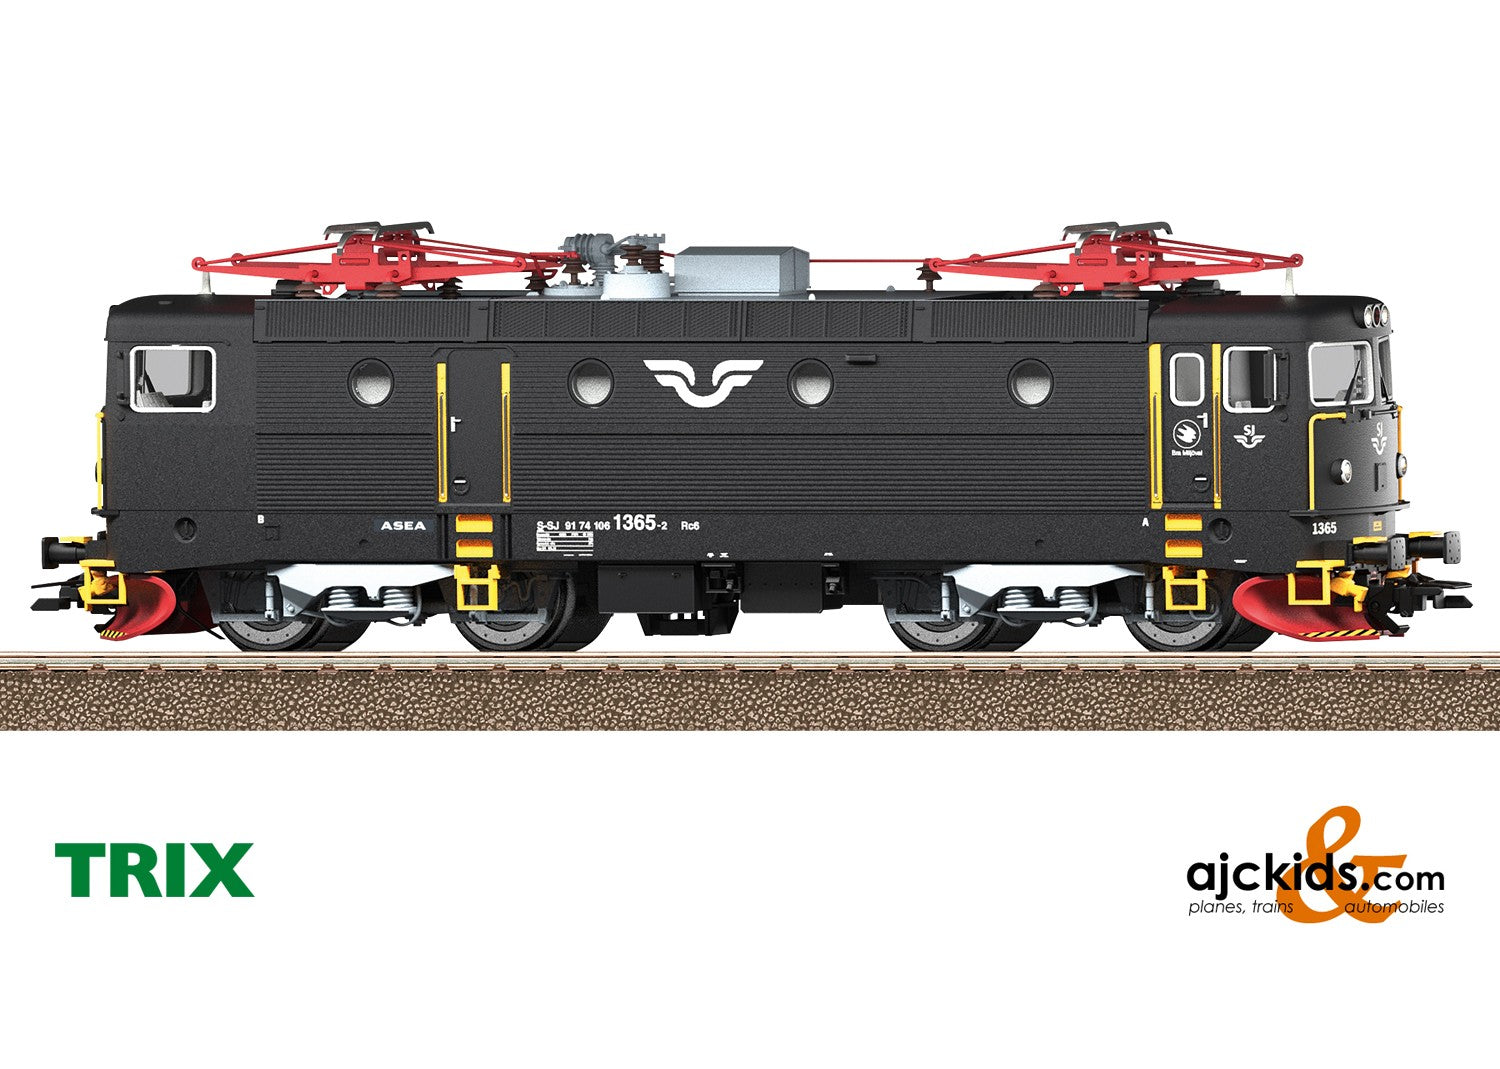 Trix 25280 - Class Rc6 Electric Locomotive at Ajckids.com